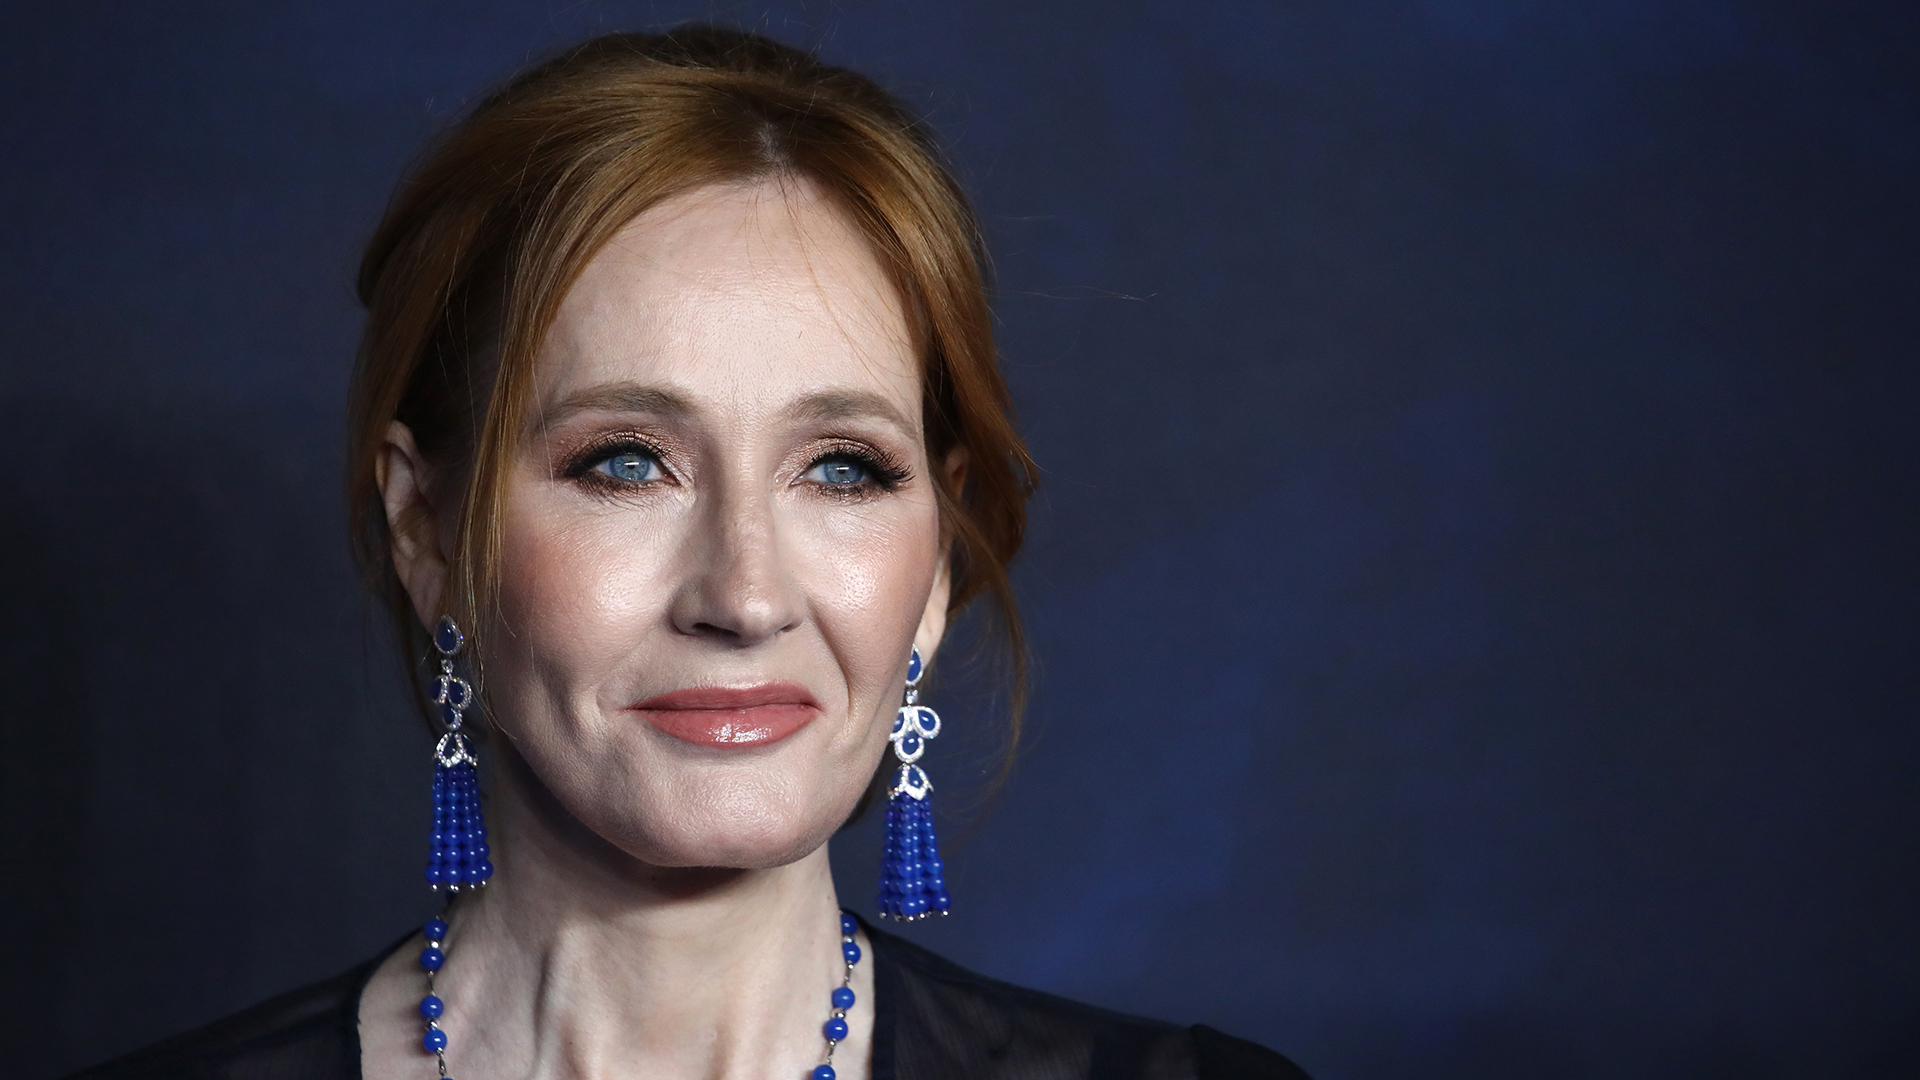 J.K. Rowling ha sido blanco de críticas por hacer comentarios transfóbicos. (Créditos/John Phillips/Getty Images)